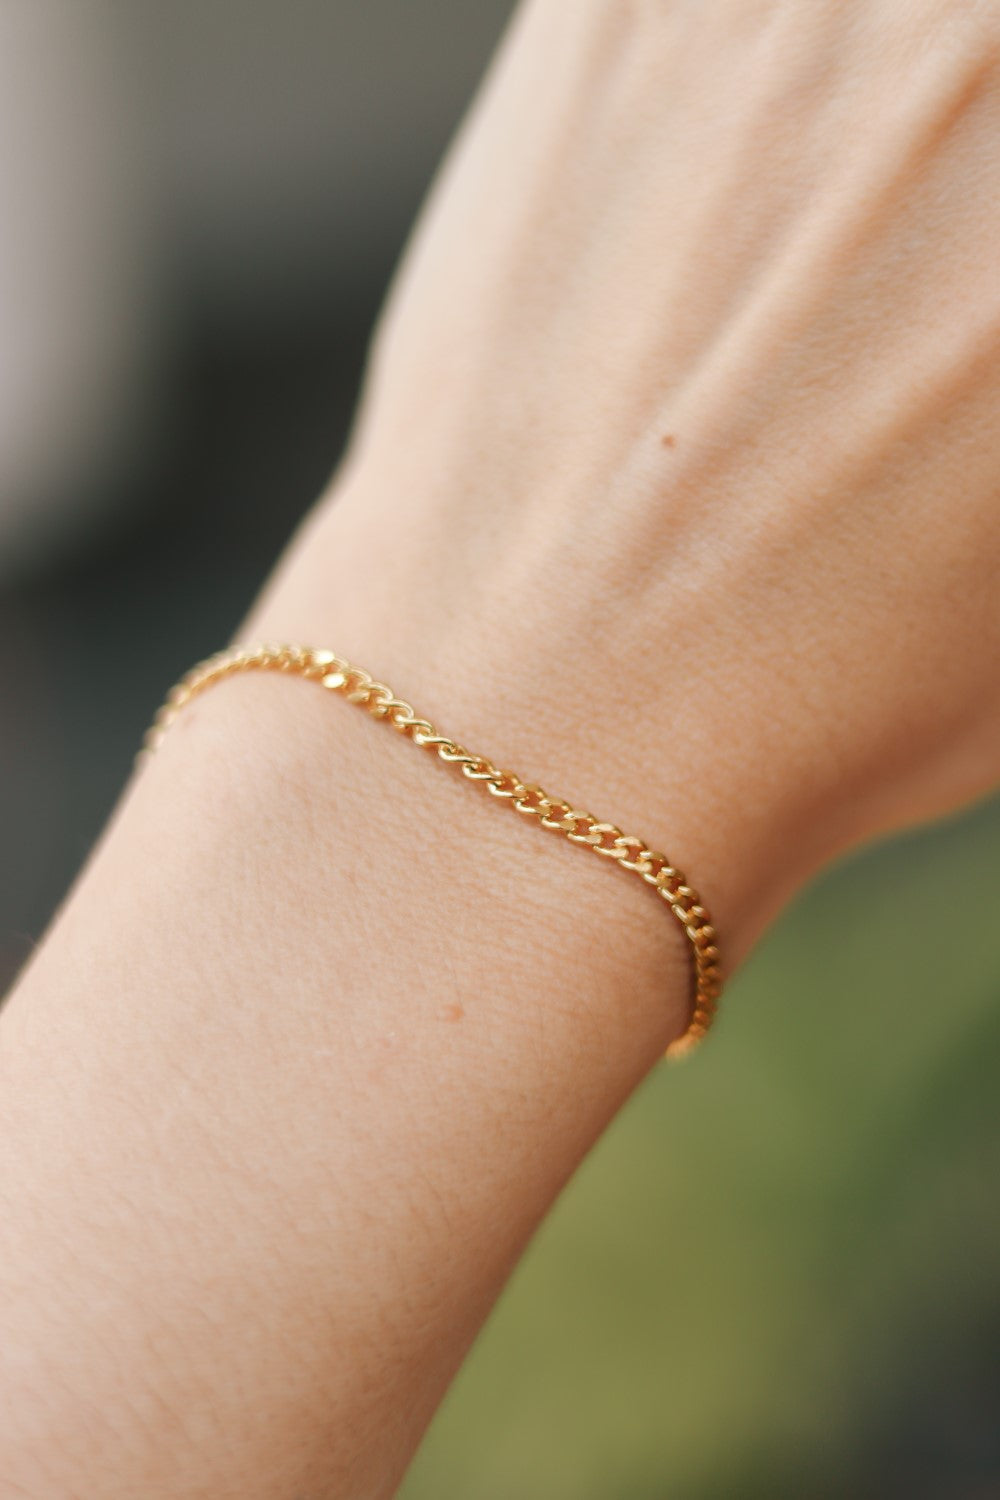 Gold bracelet, dainty gold tone stainless steel chain bracelet